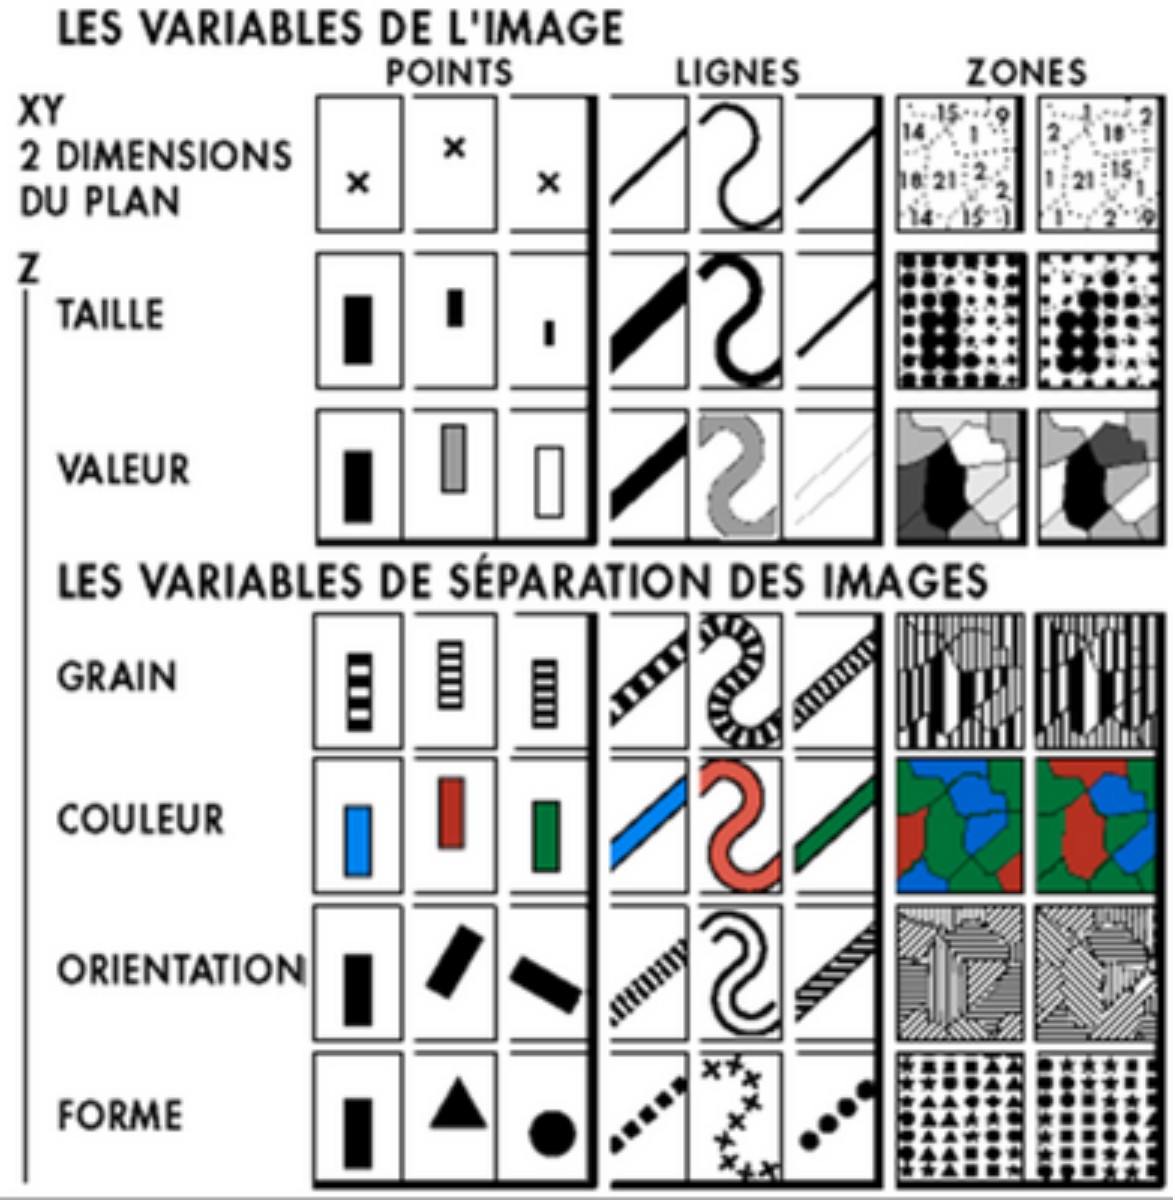 /galleries/post-images/visual-mutation-testing/dimensions.jpg